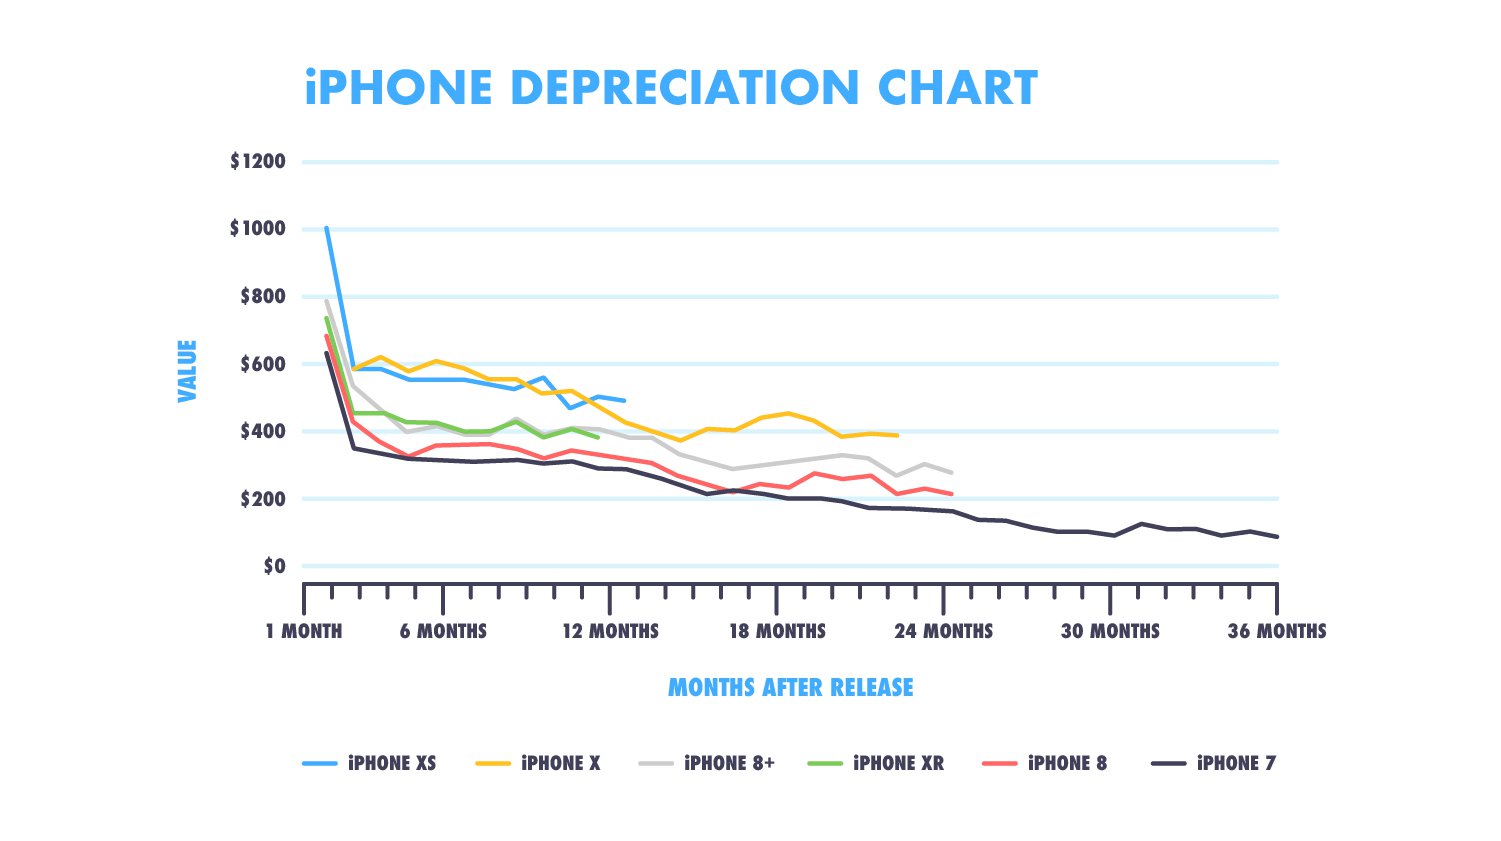 iPhone depreciation